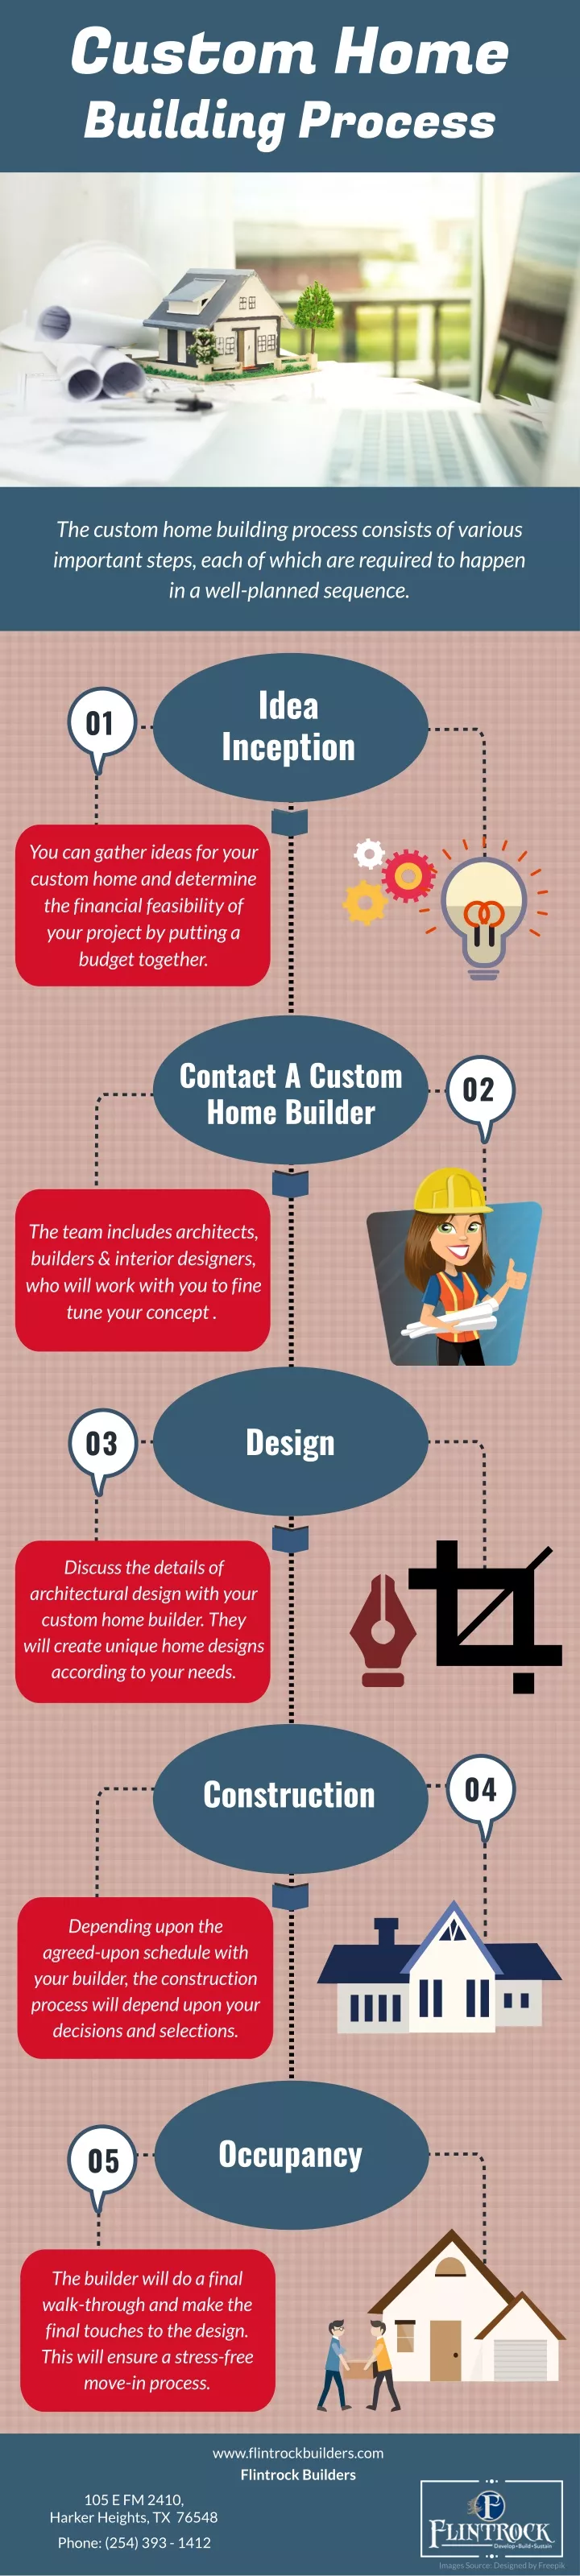 custom home building process